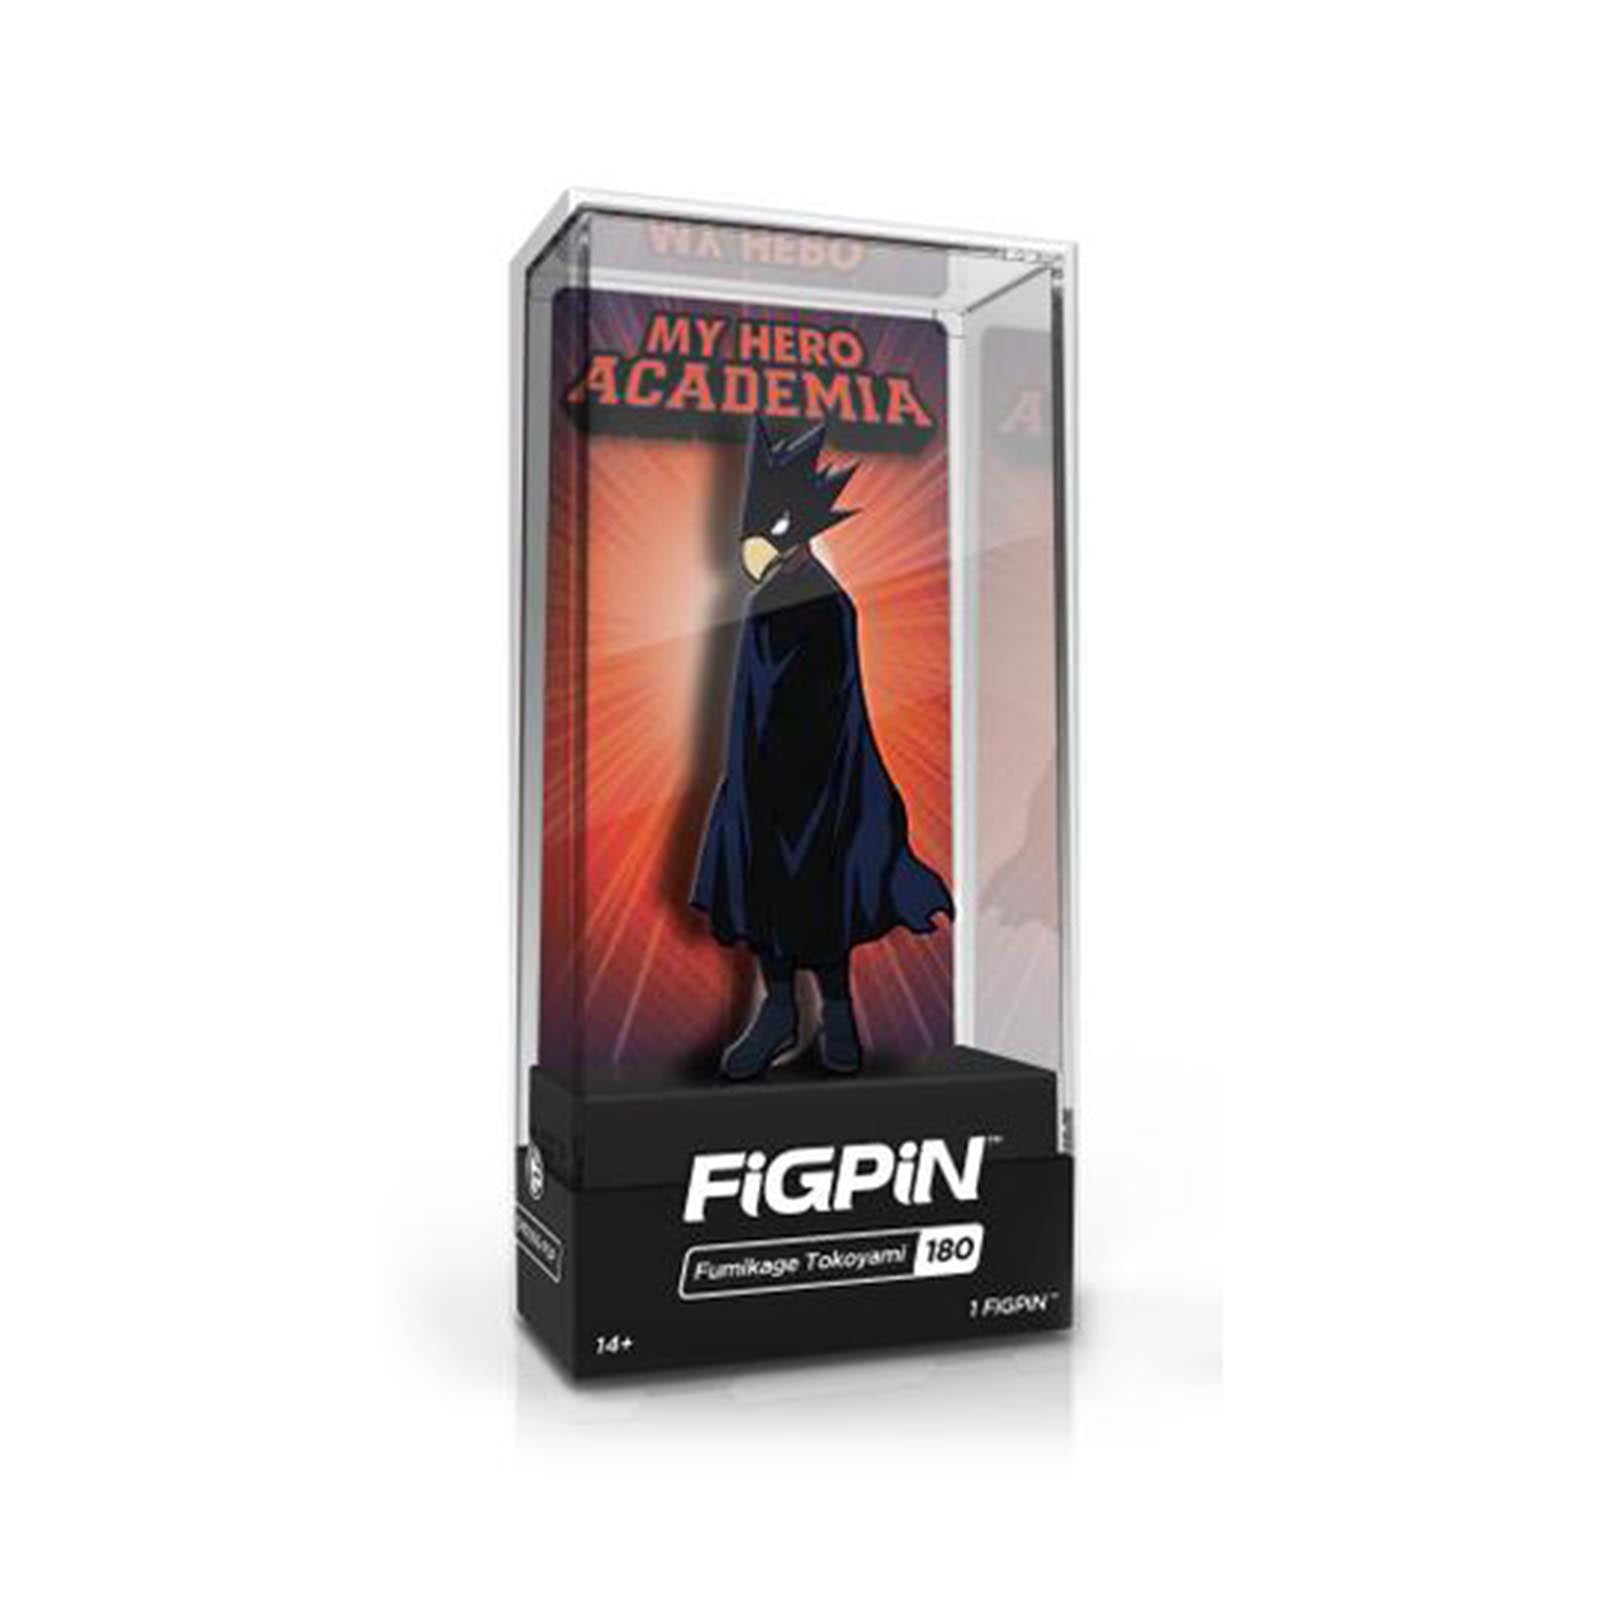 Figpin Borderlands 3 FL4K Collectible Pin # 252 NEW Metal Enamel Pin 